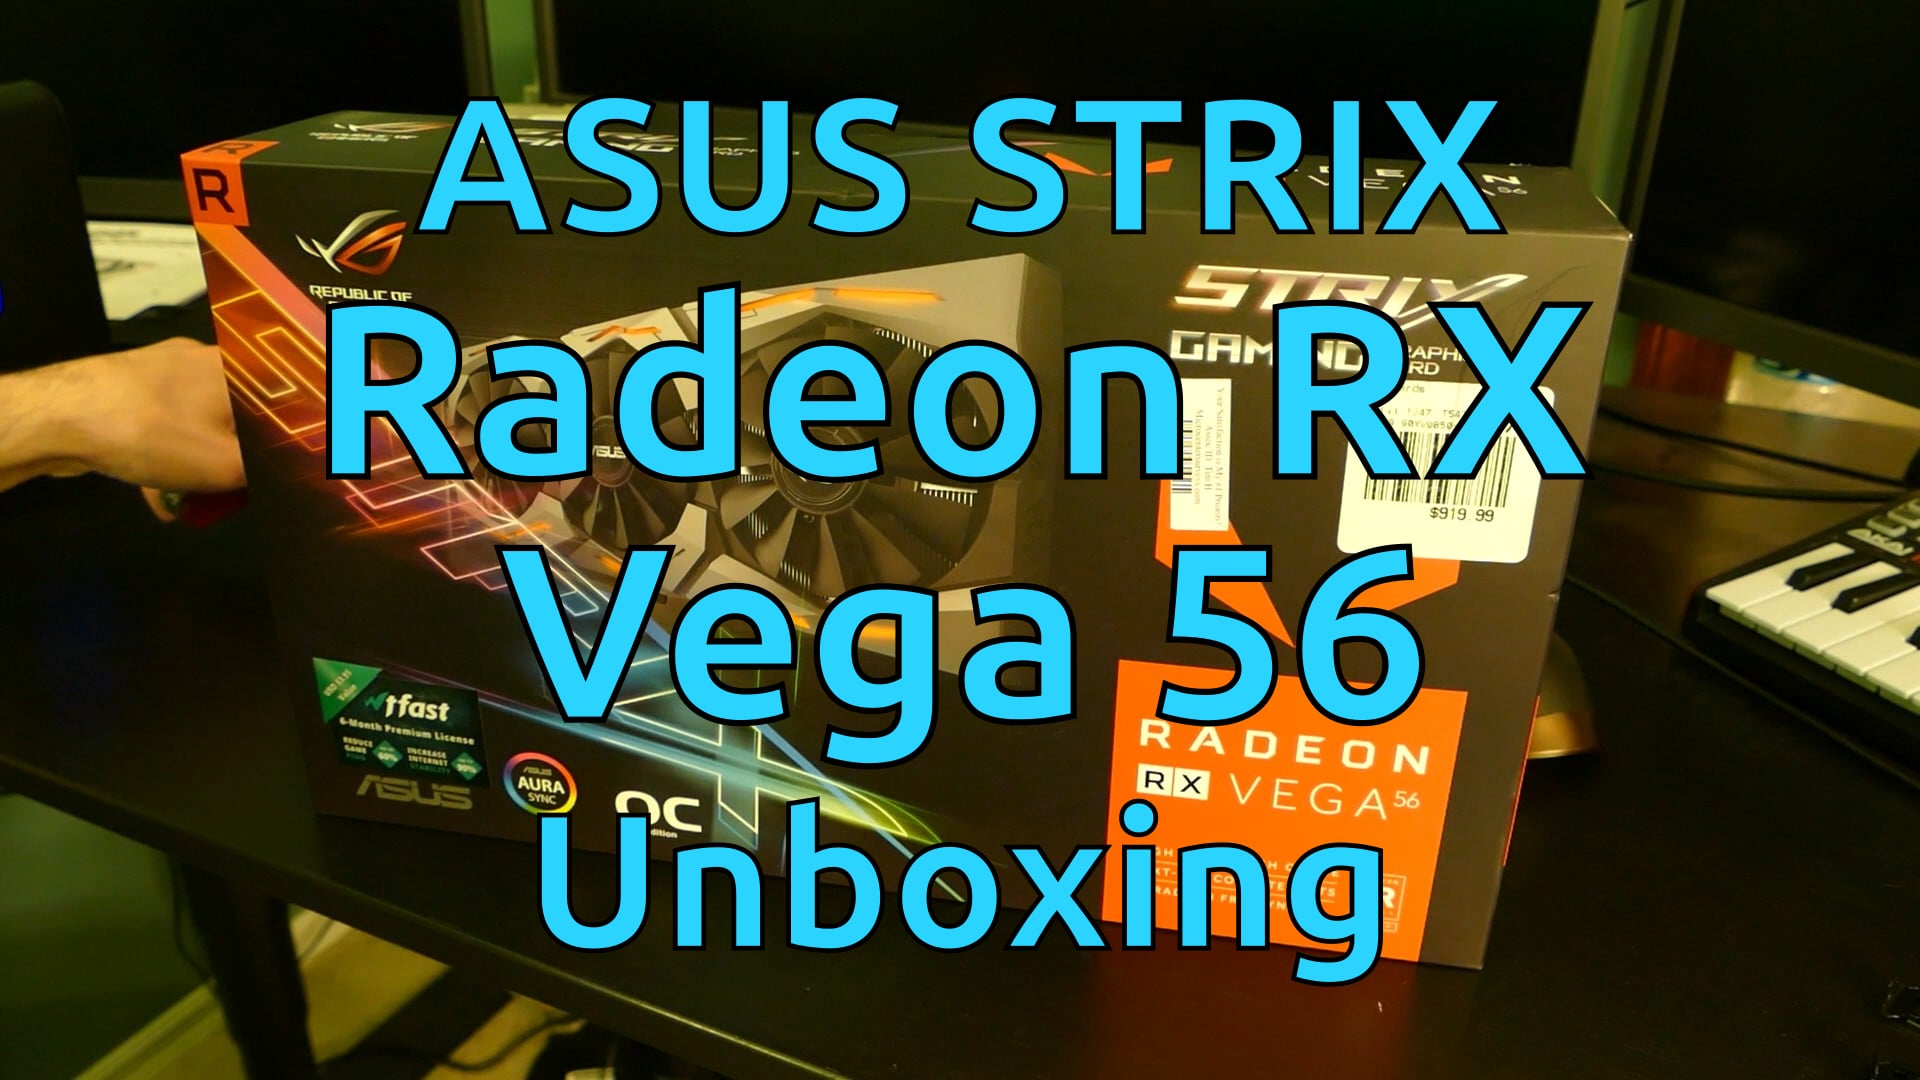 AMD Vega 56 (Asus STRIX) Unboxing